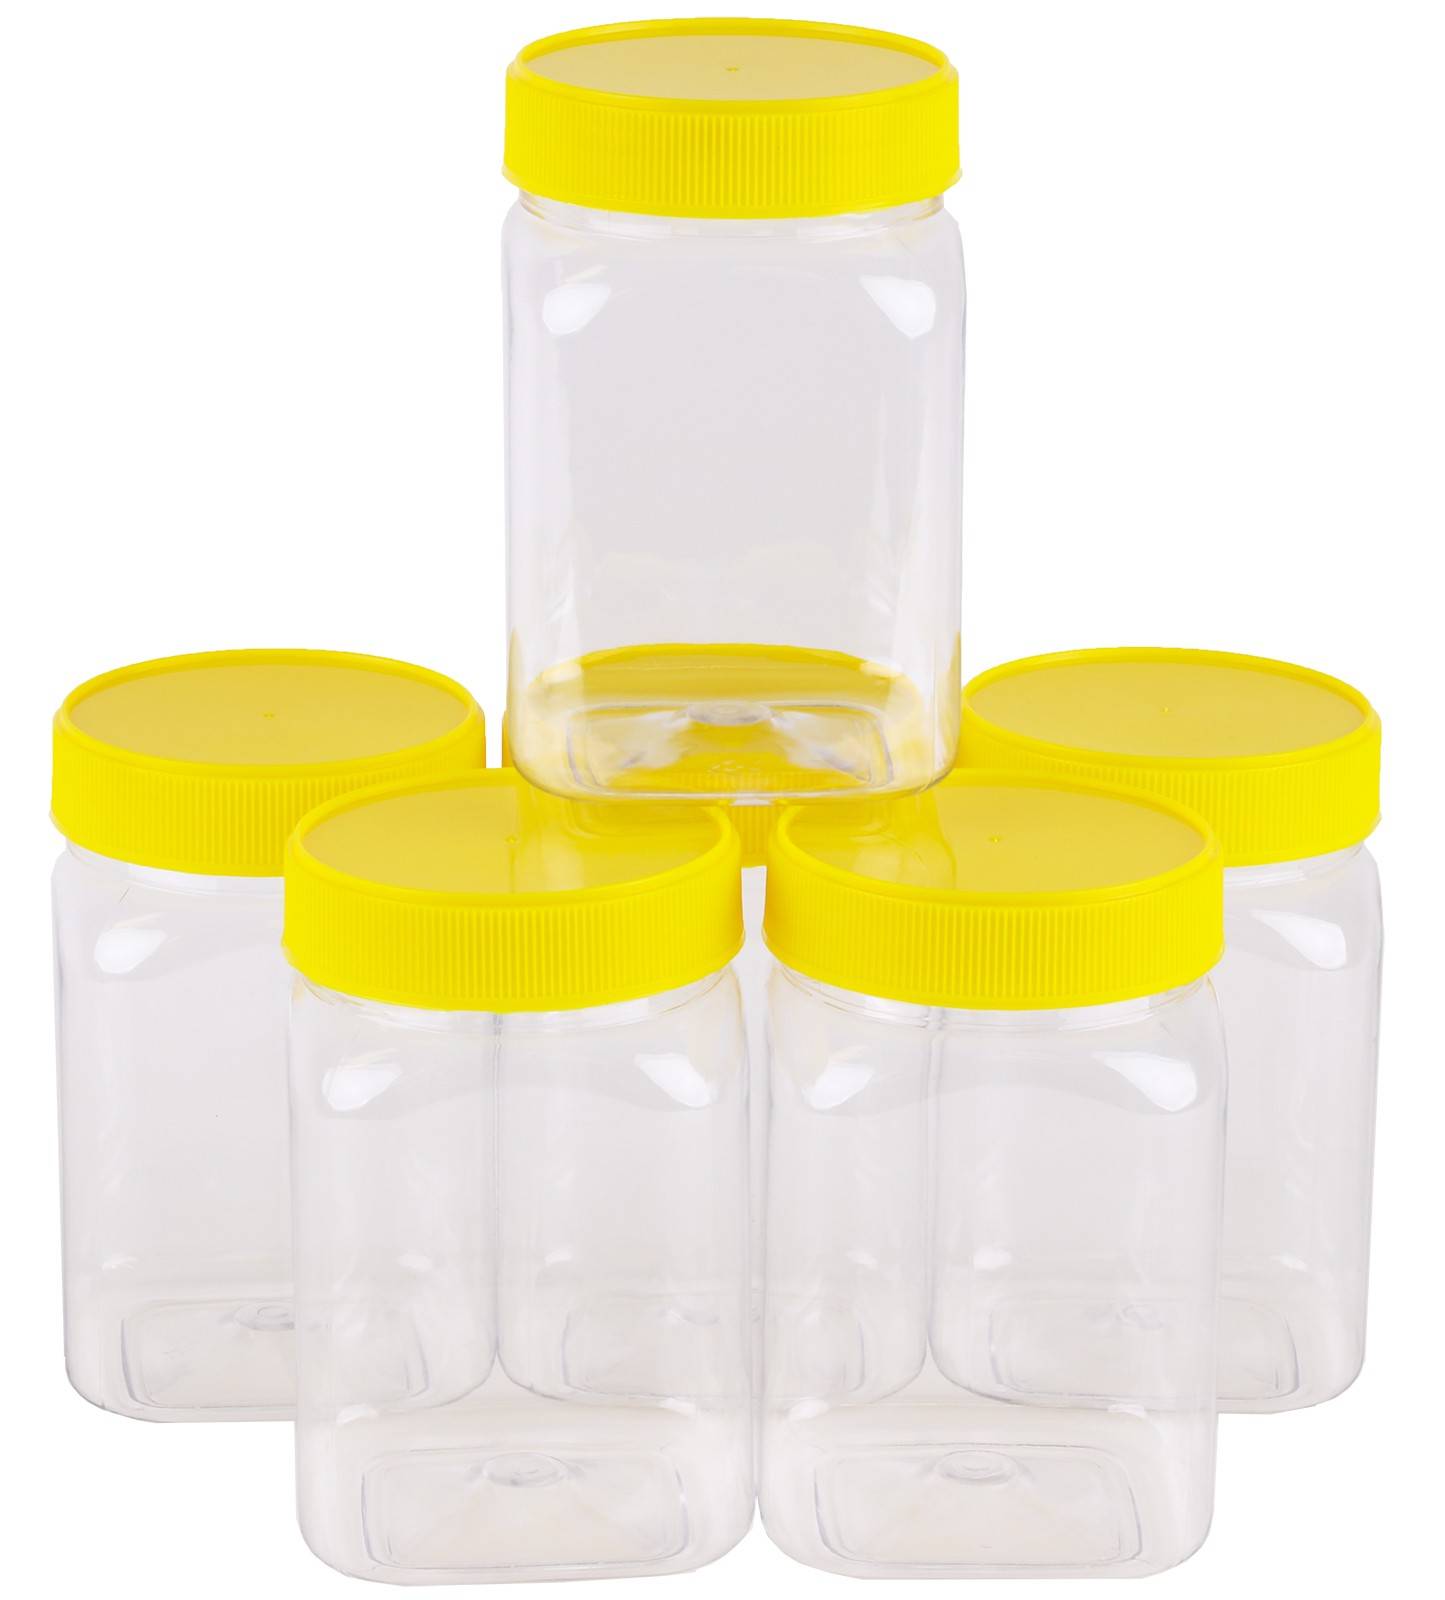 Plastic Honey Jar 500gm Square Yellow Lid, Food Grade, Carton 210 pcs